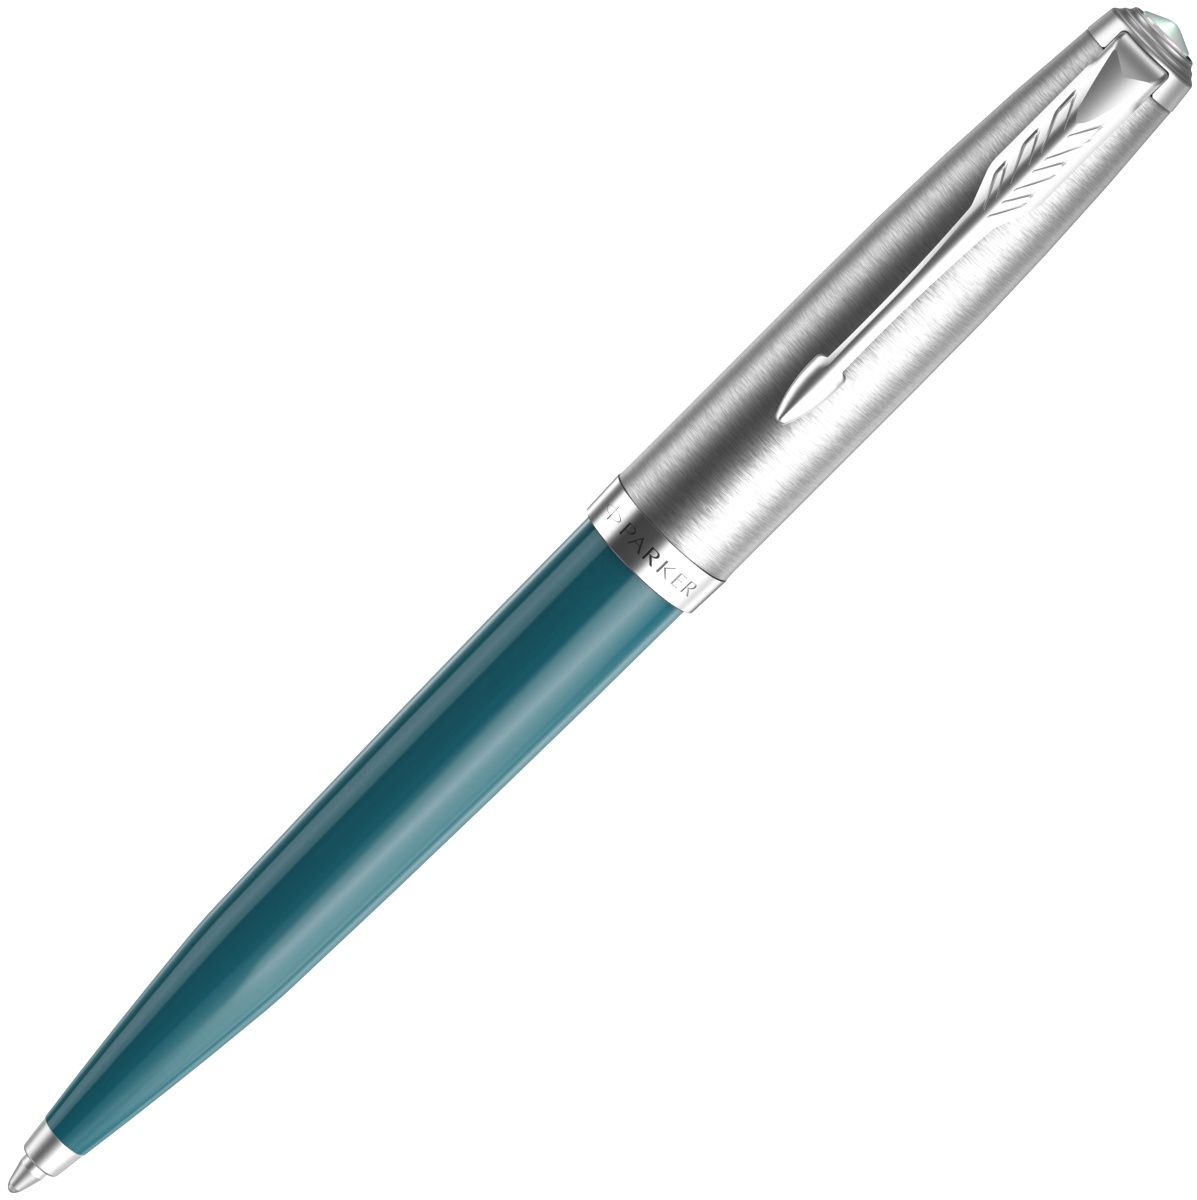  Ручка шариковая Parker 51 Core, Teal Blue CT